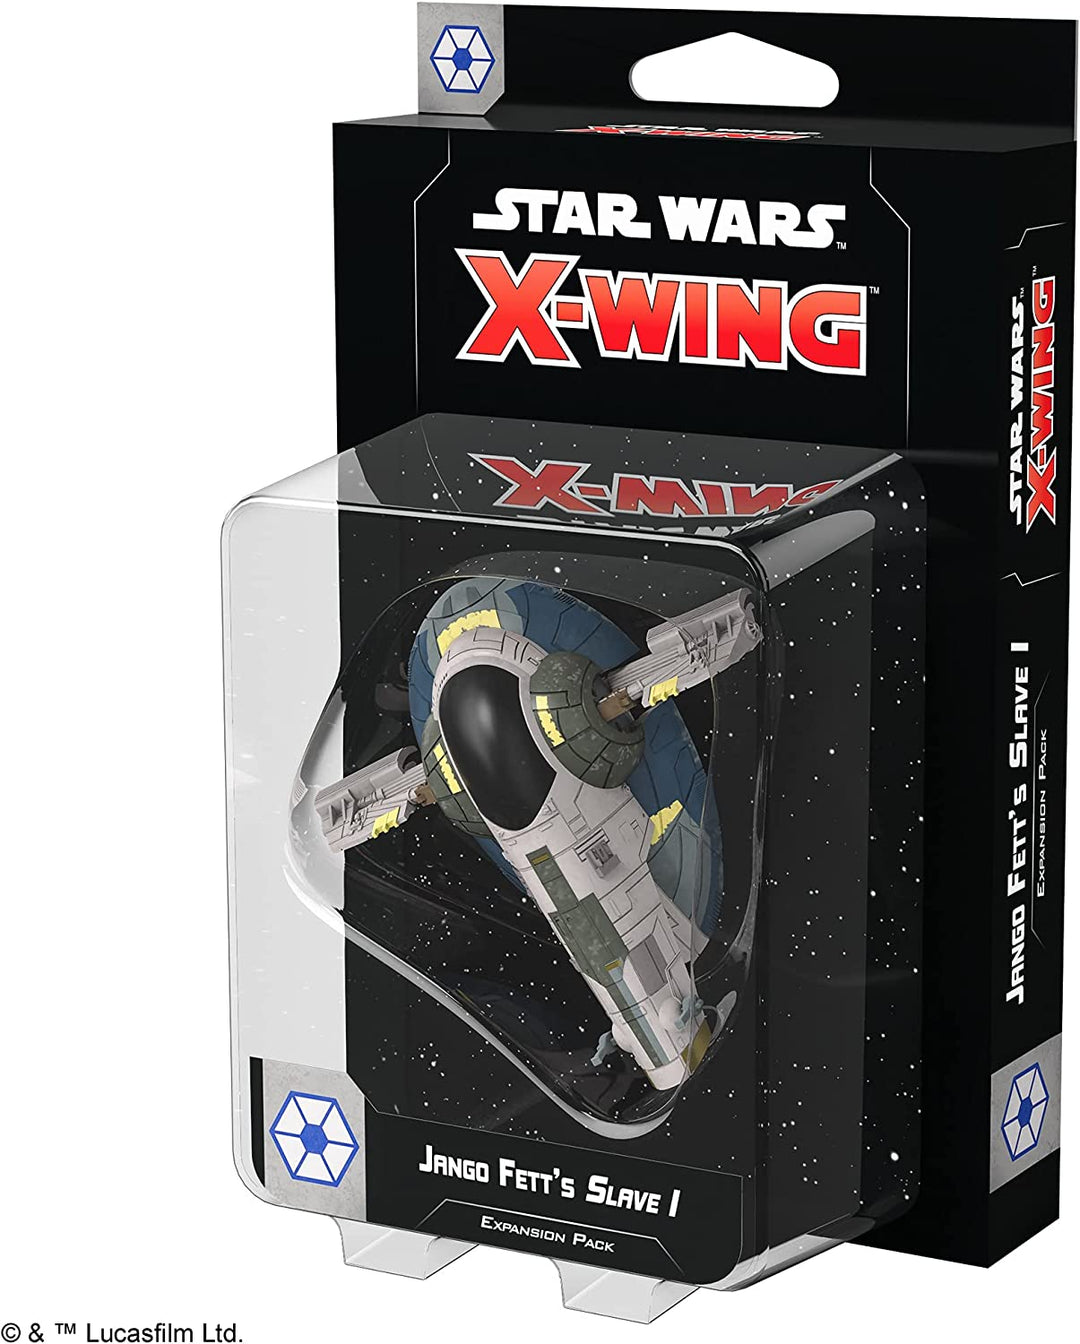 Star Wars: X-Wing: Jango Fett's Slave I Expansion Pack